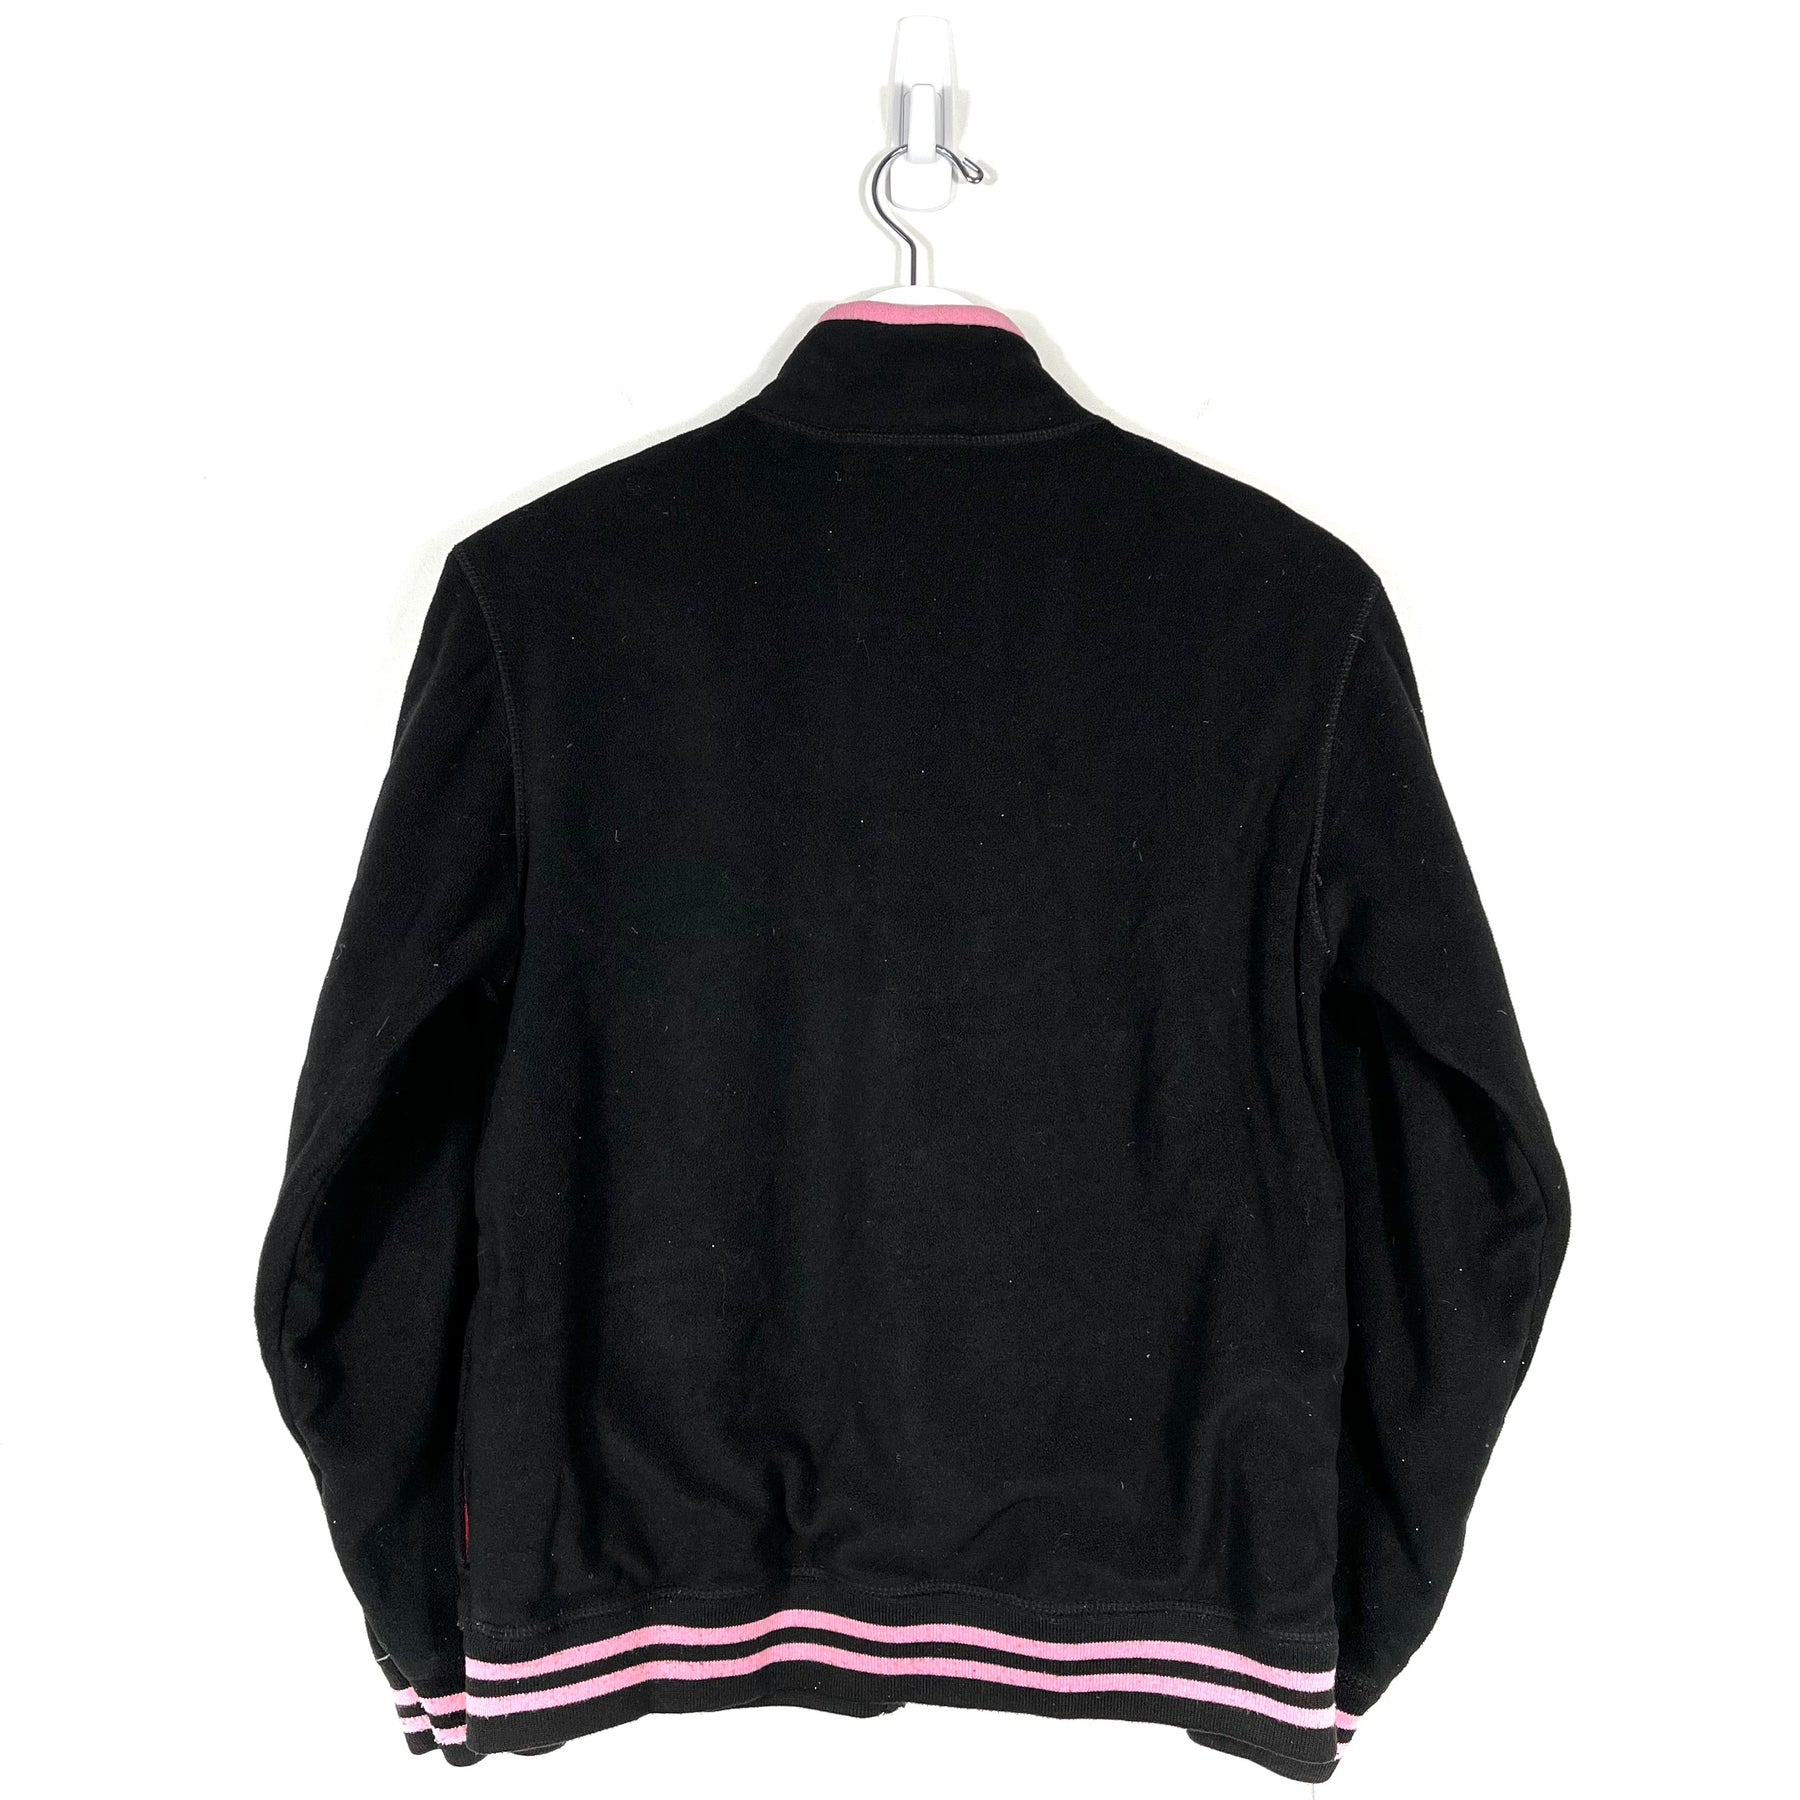 Vintage Polo Ralph Lauren Fleece Jacket - Women's Small